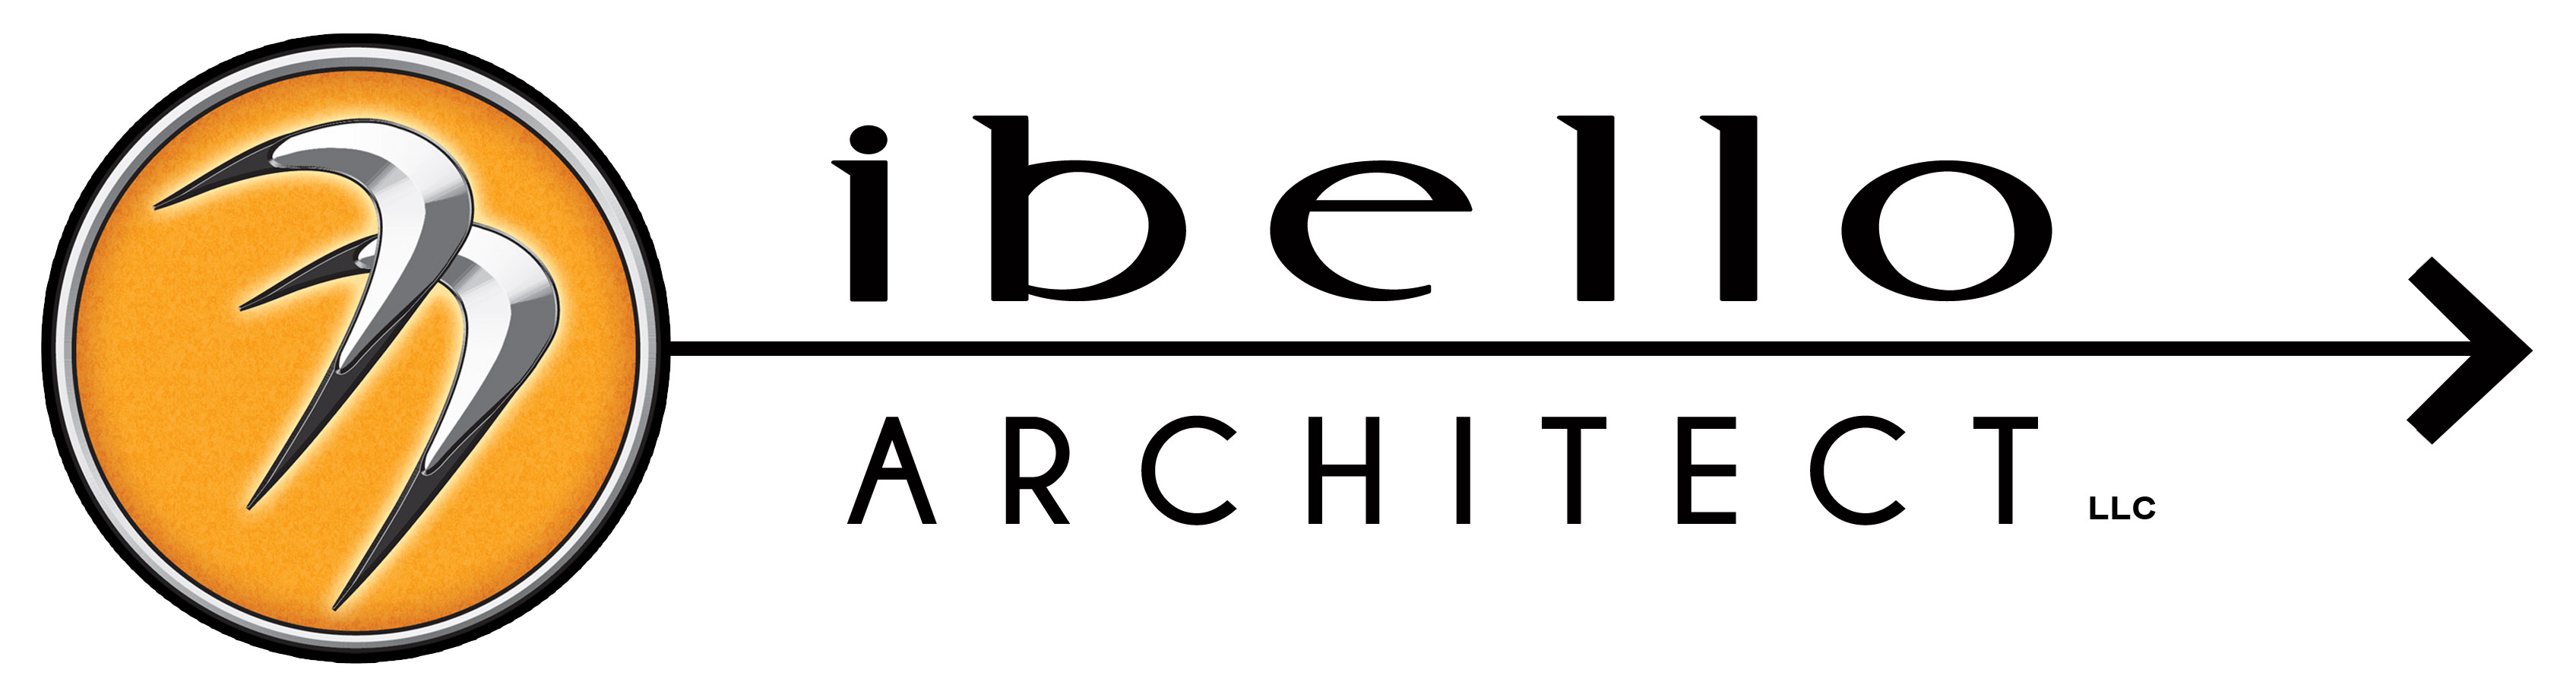 ibello ARCHITECT, LLC.